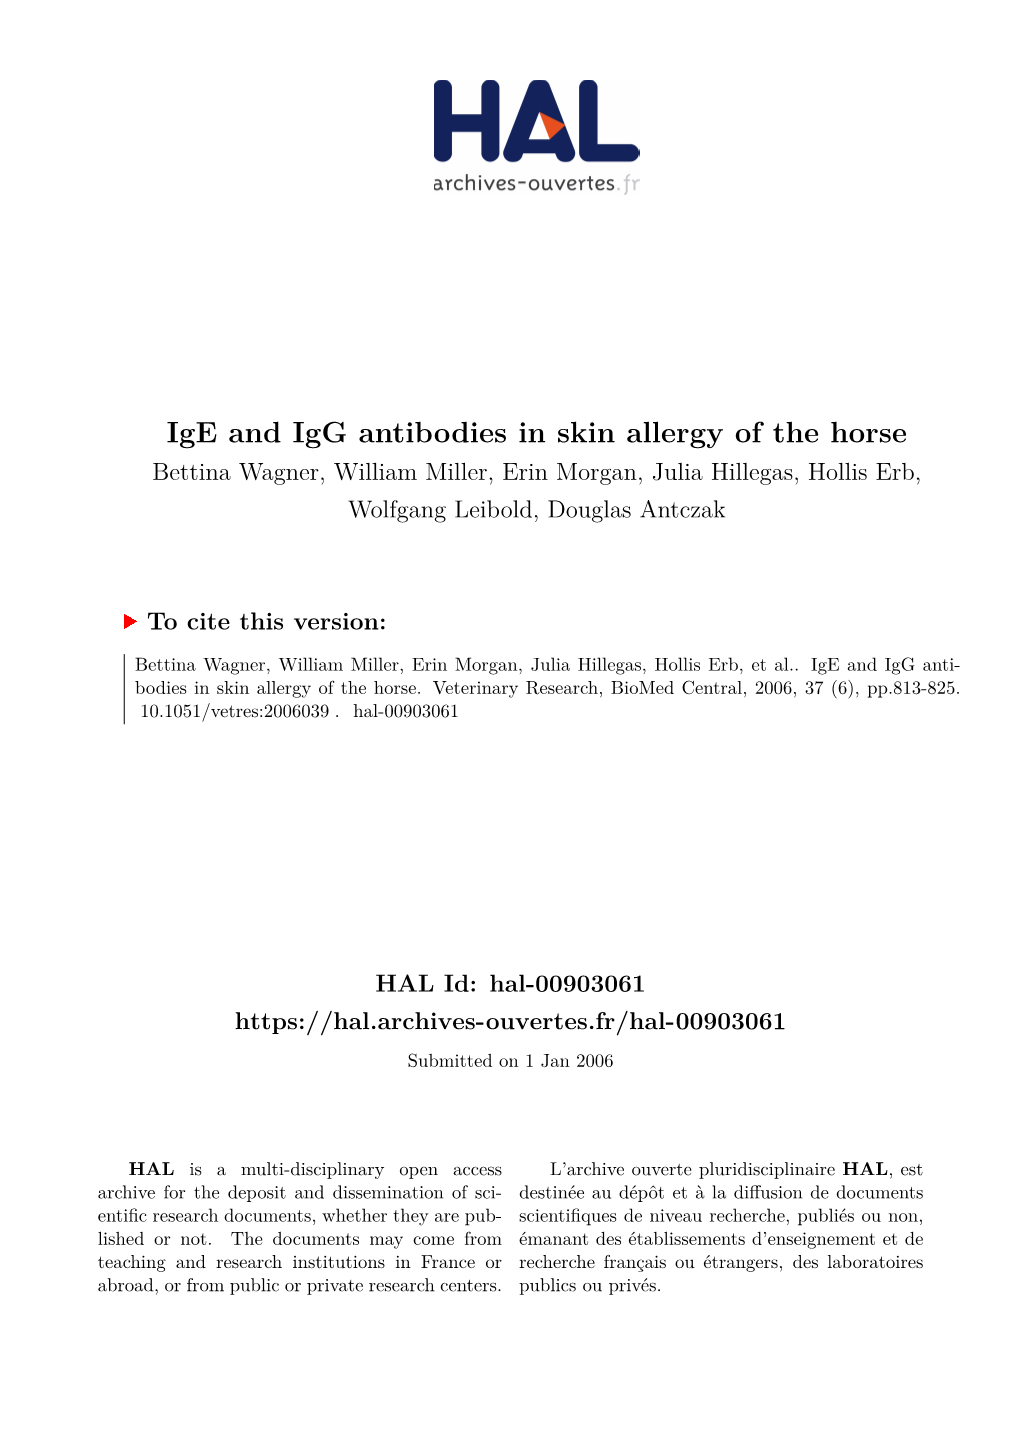 Ige and Igg Antibodies in Skin Allergy of the Horse Bettina Wagner, William Miller, Erin Morgan, Julia Hillegas, Hollis Erb, Wolfgang Leibold, Douglas Antczak